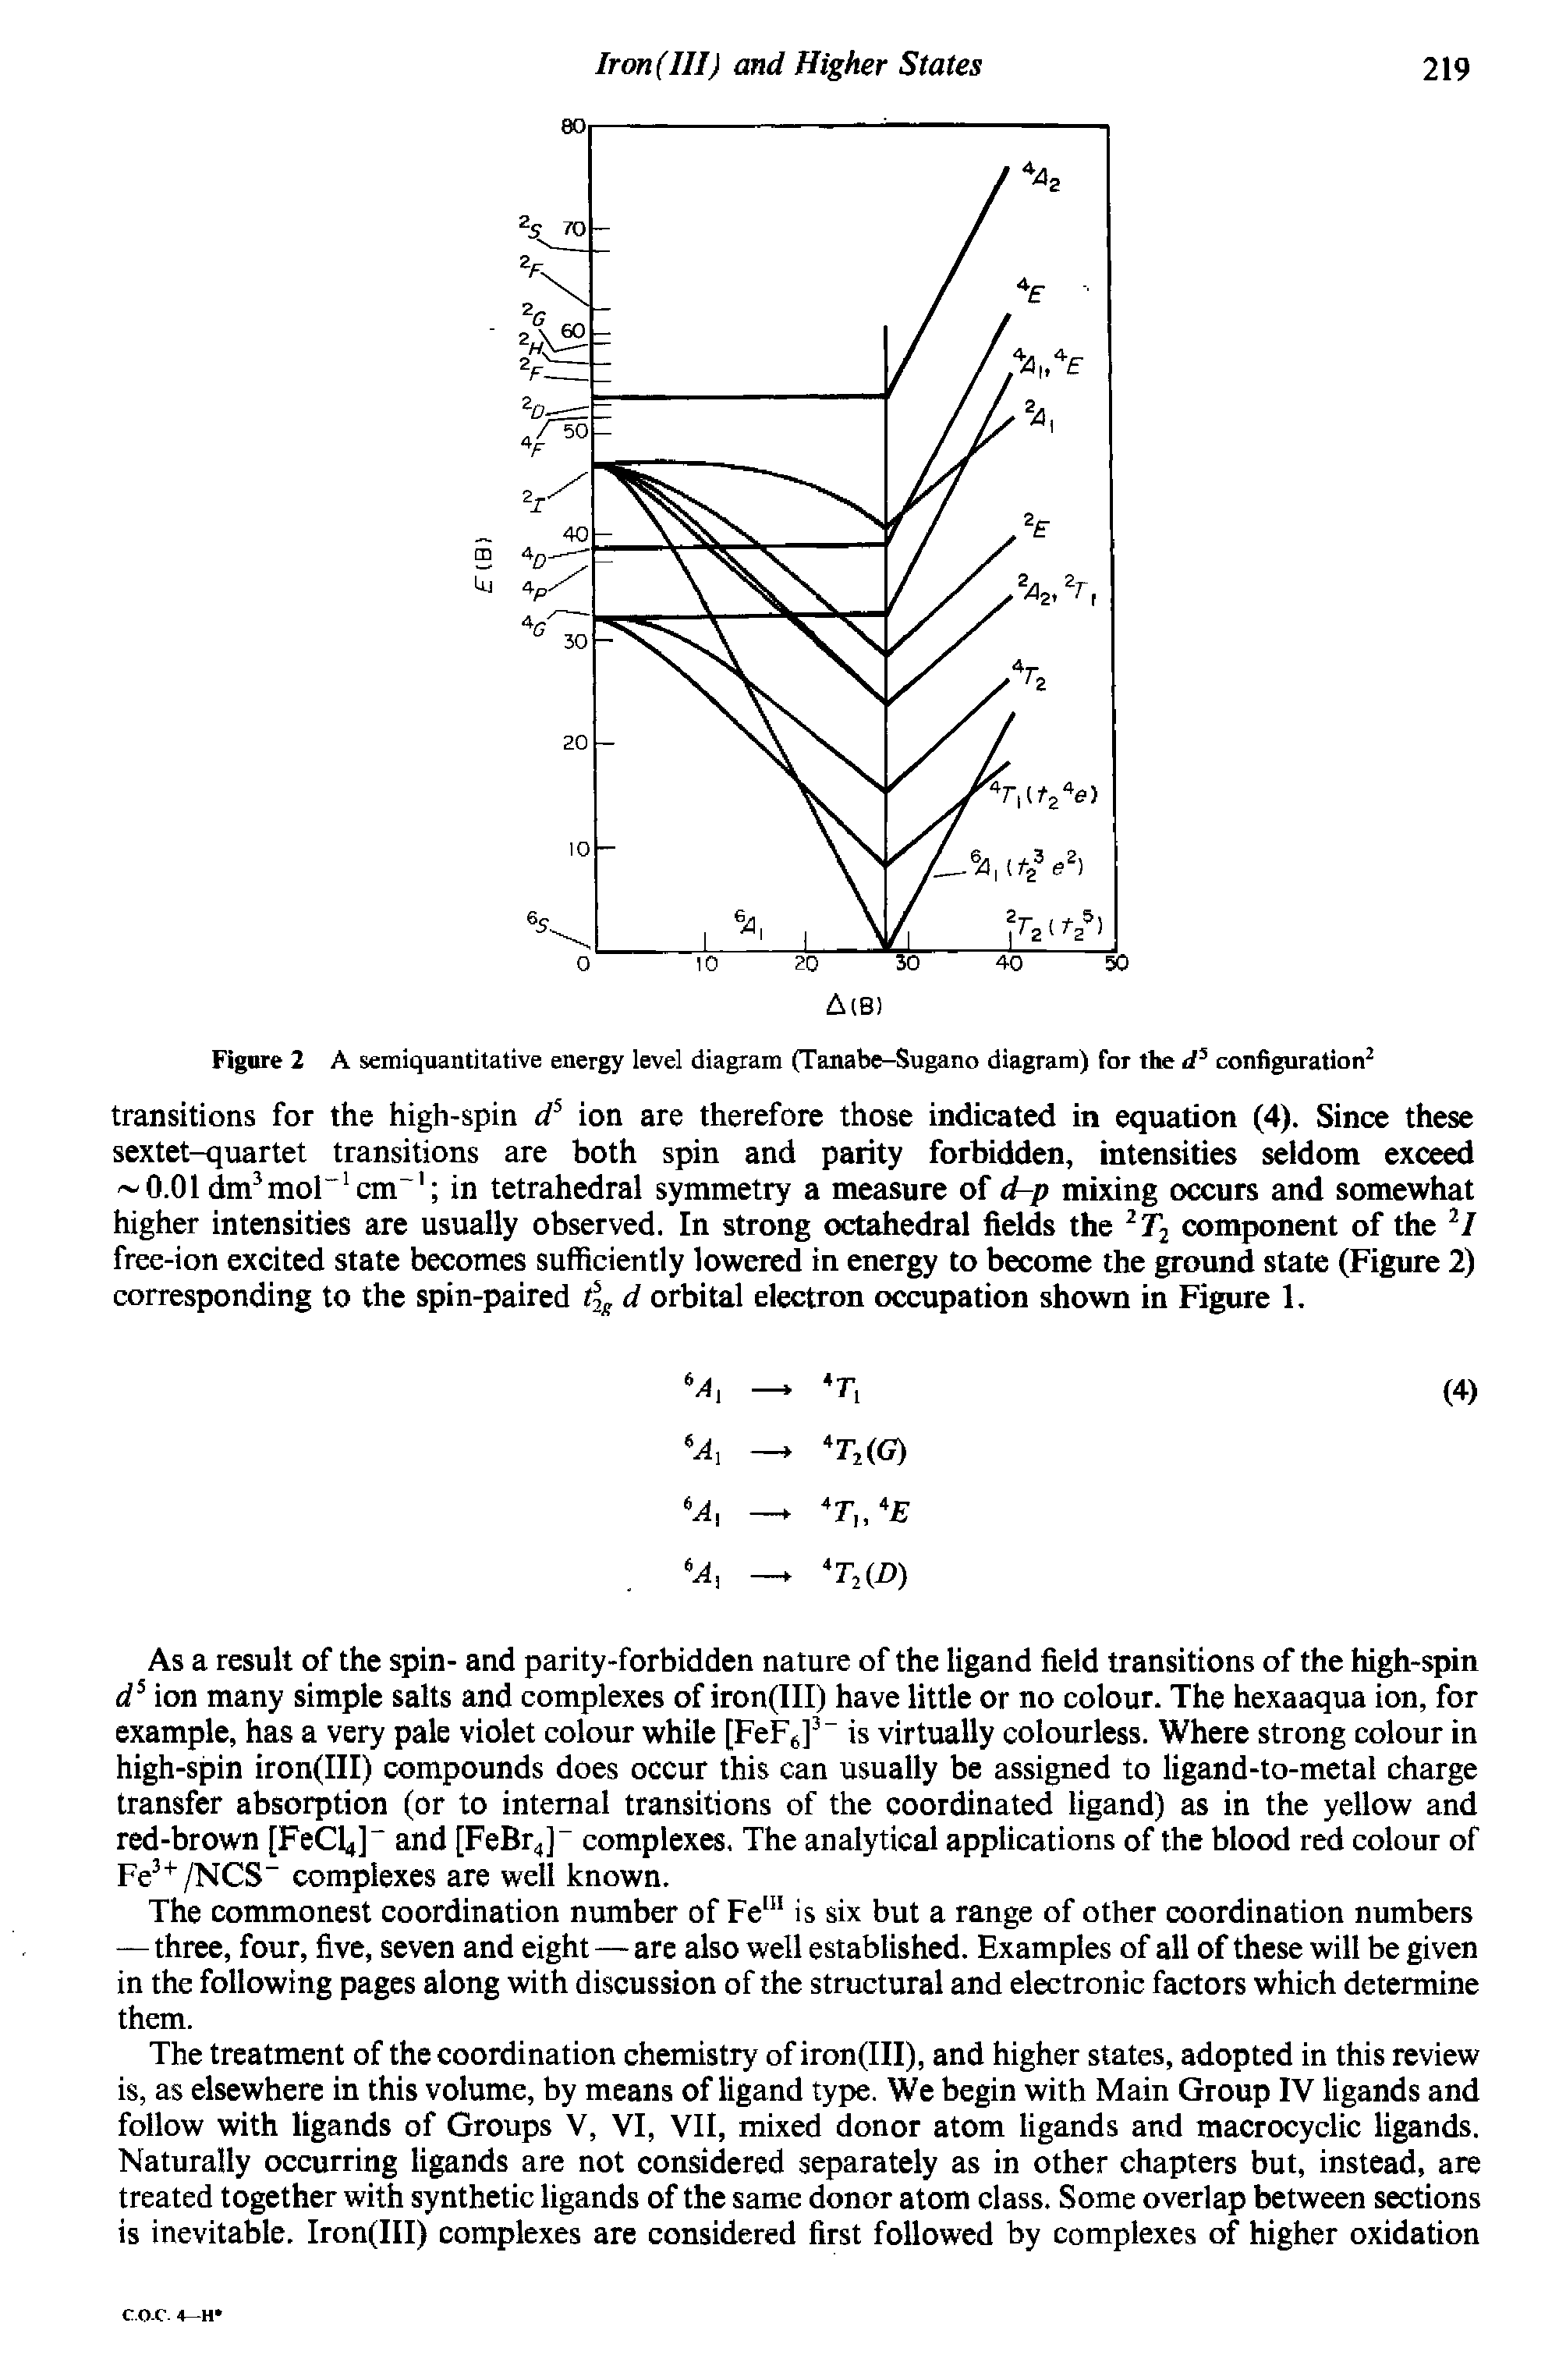 Figure 2 A semiquantitative energy level diagram (Tanabe-Sugano diagram) for the d5 configuration2...